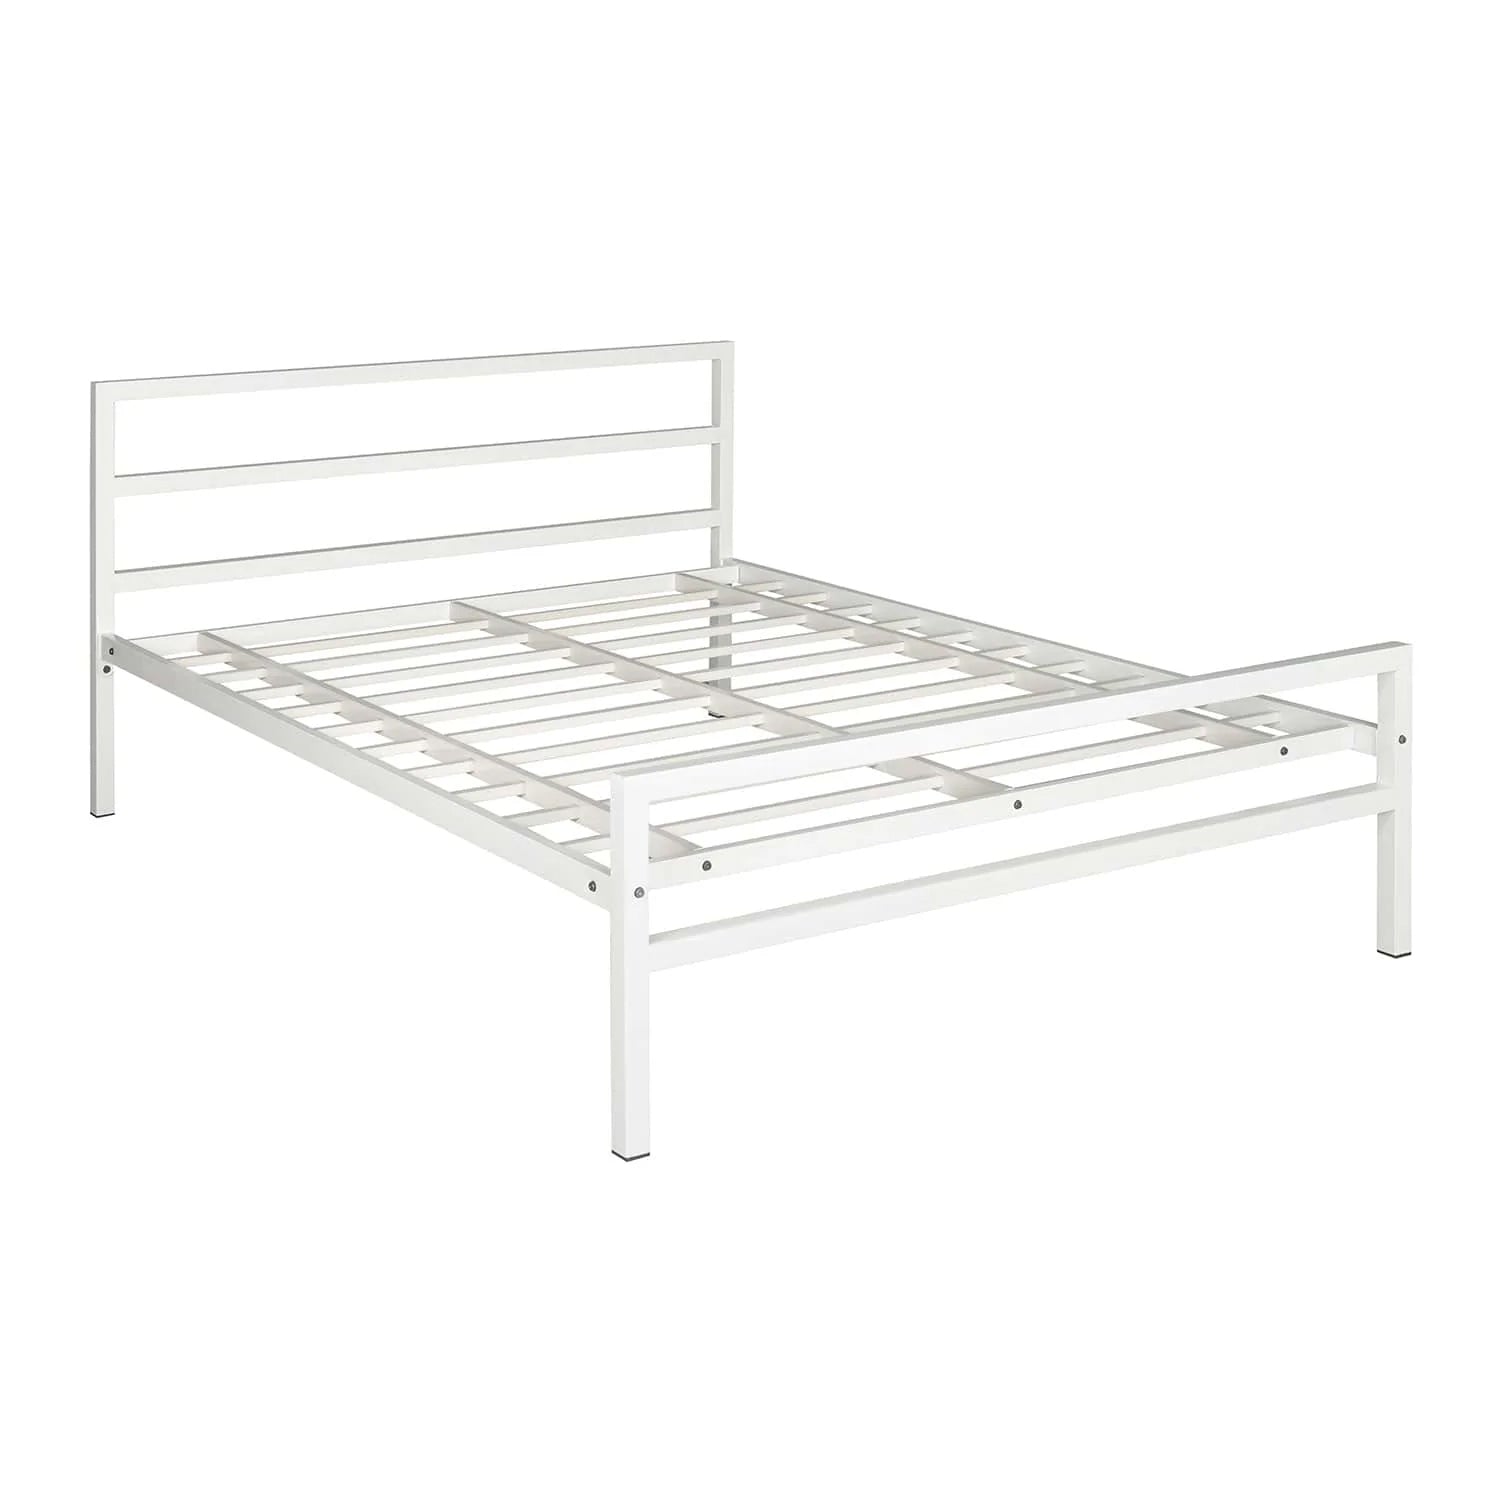 Striker Metal Bed White Lite Dual without mattress side view